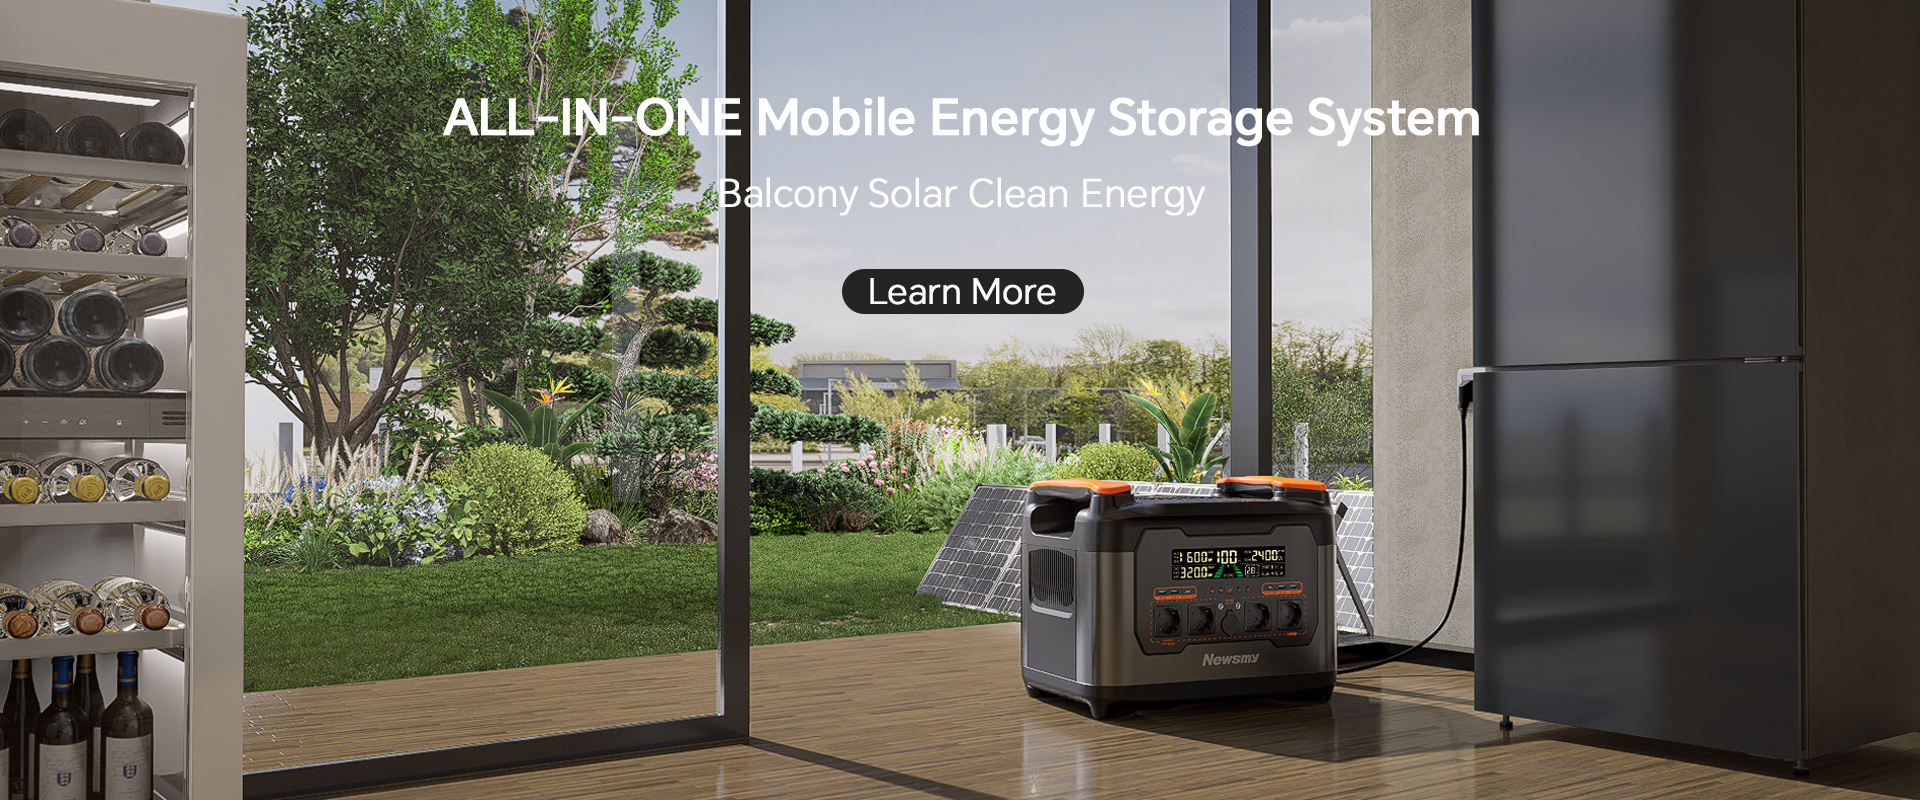 mobile home energy storage